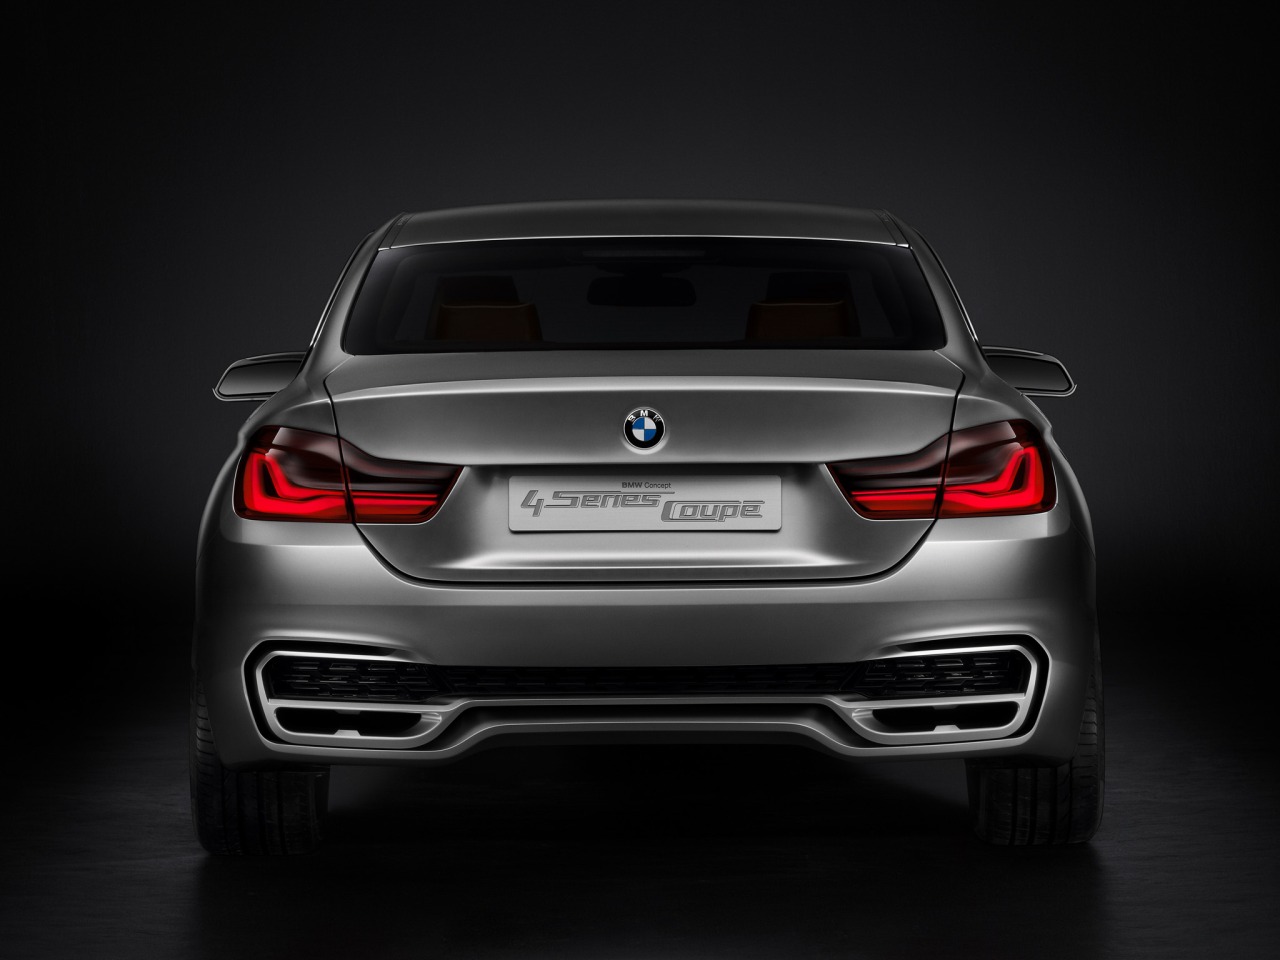 BMW Concept 4 Series Coupé Backgrounds on Wallpapers Vista